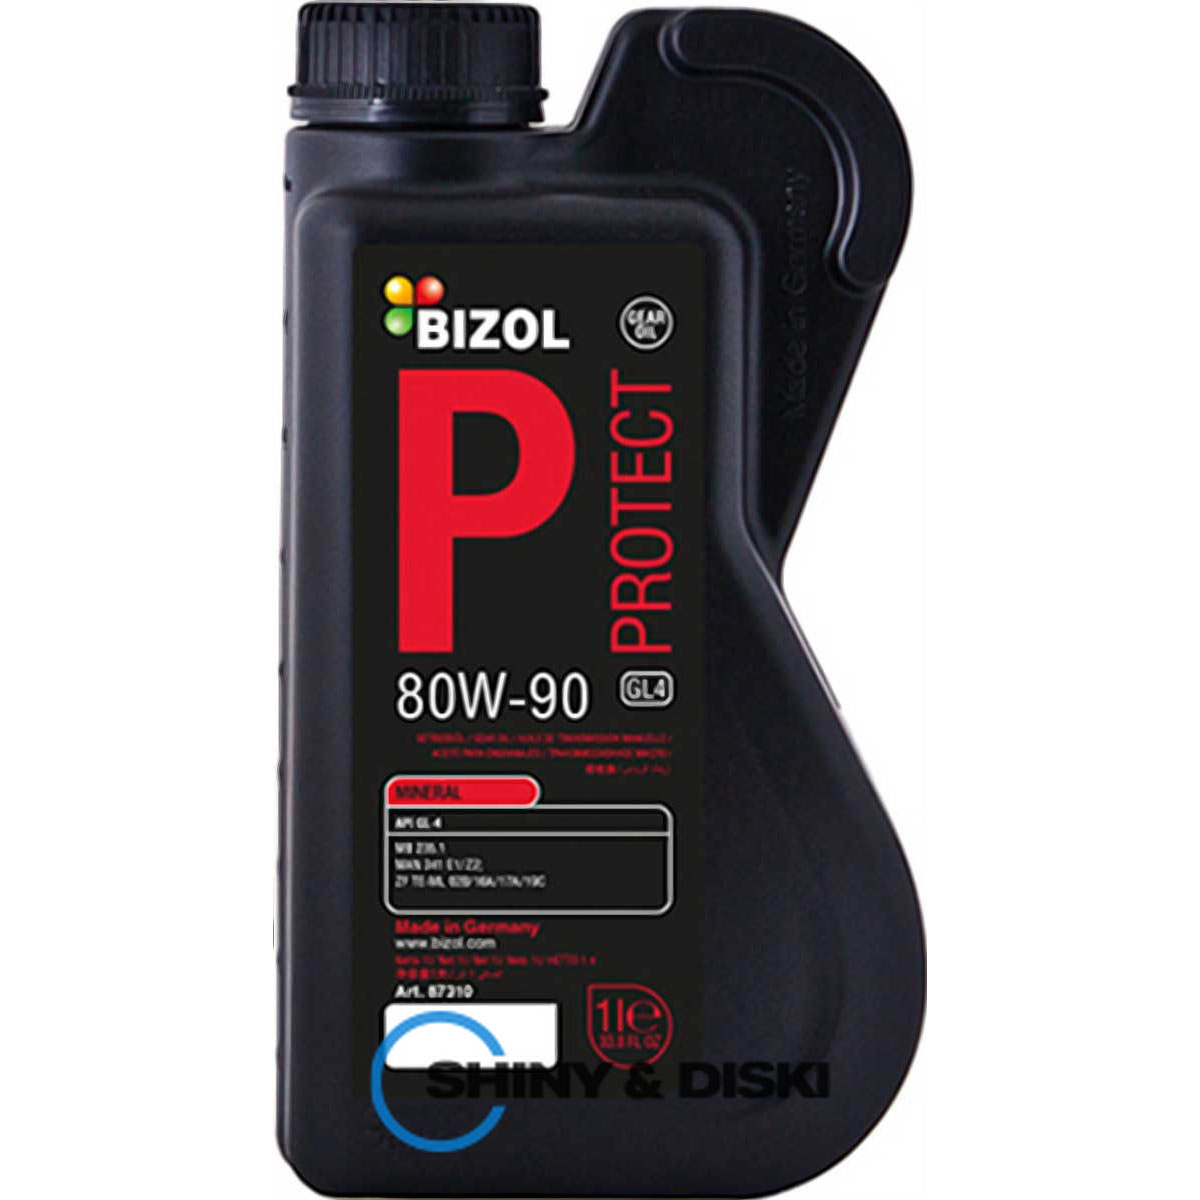 bizol protect gear oil